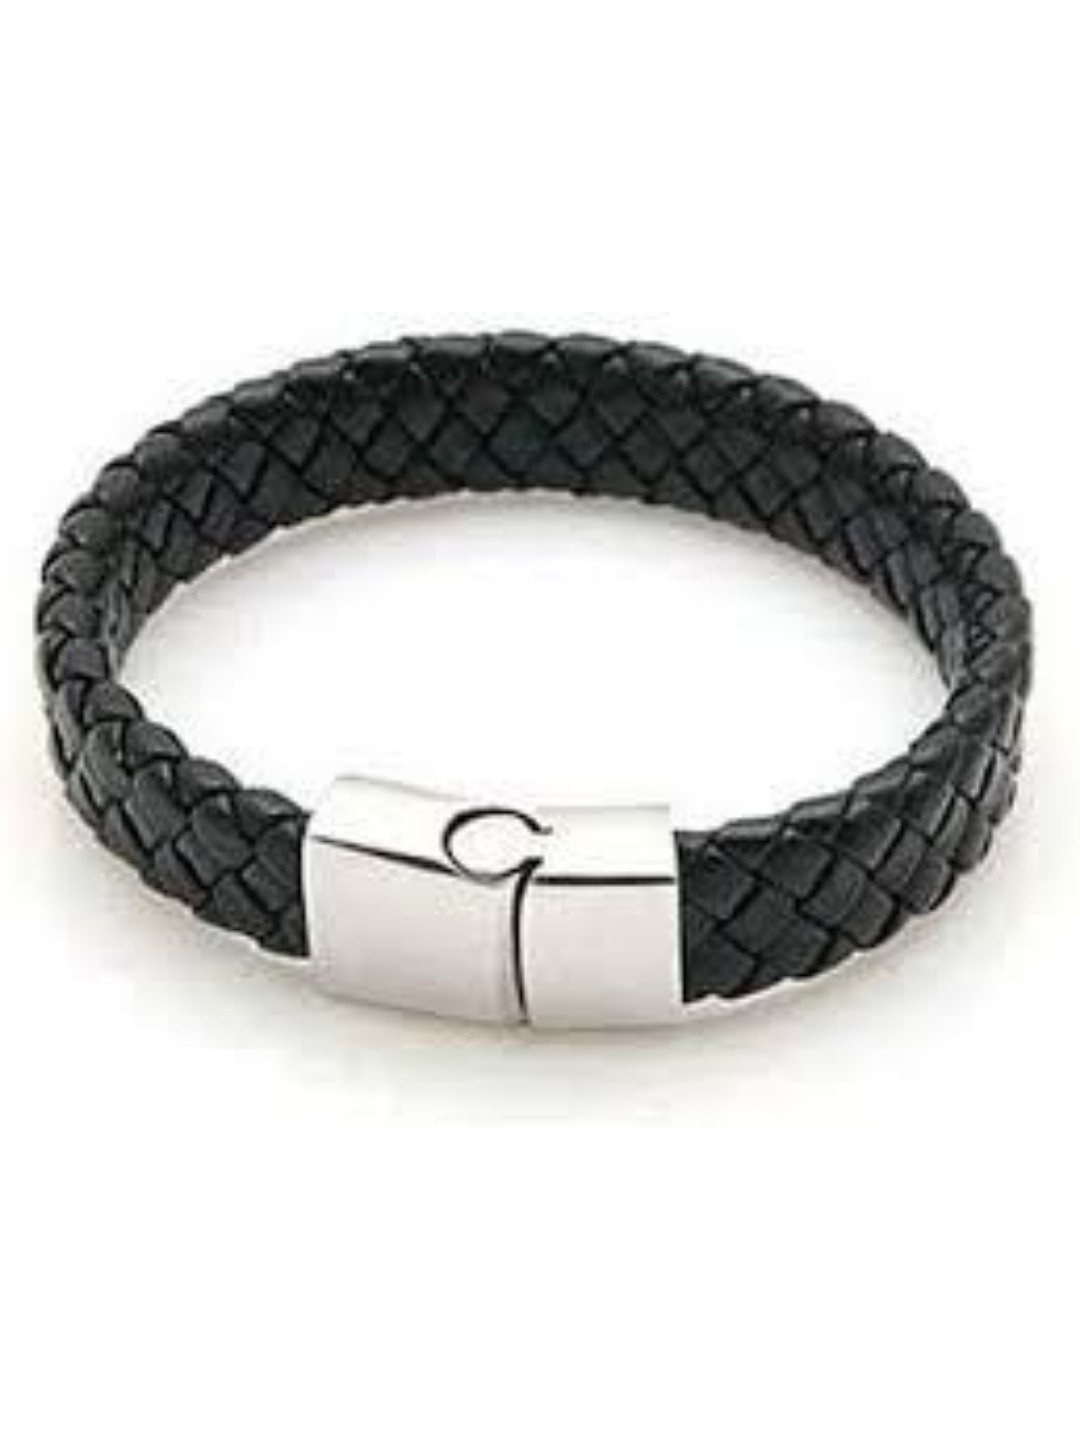 Avrum Black Leather Bracelet